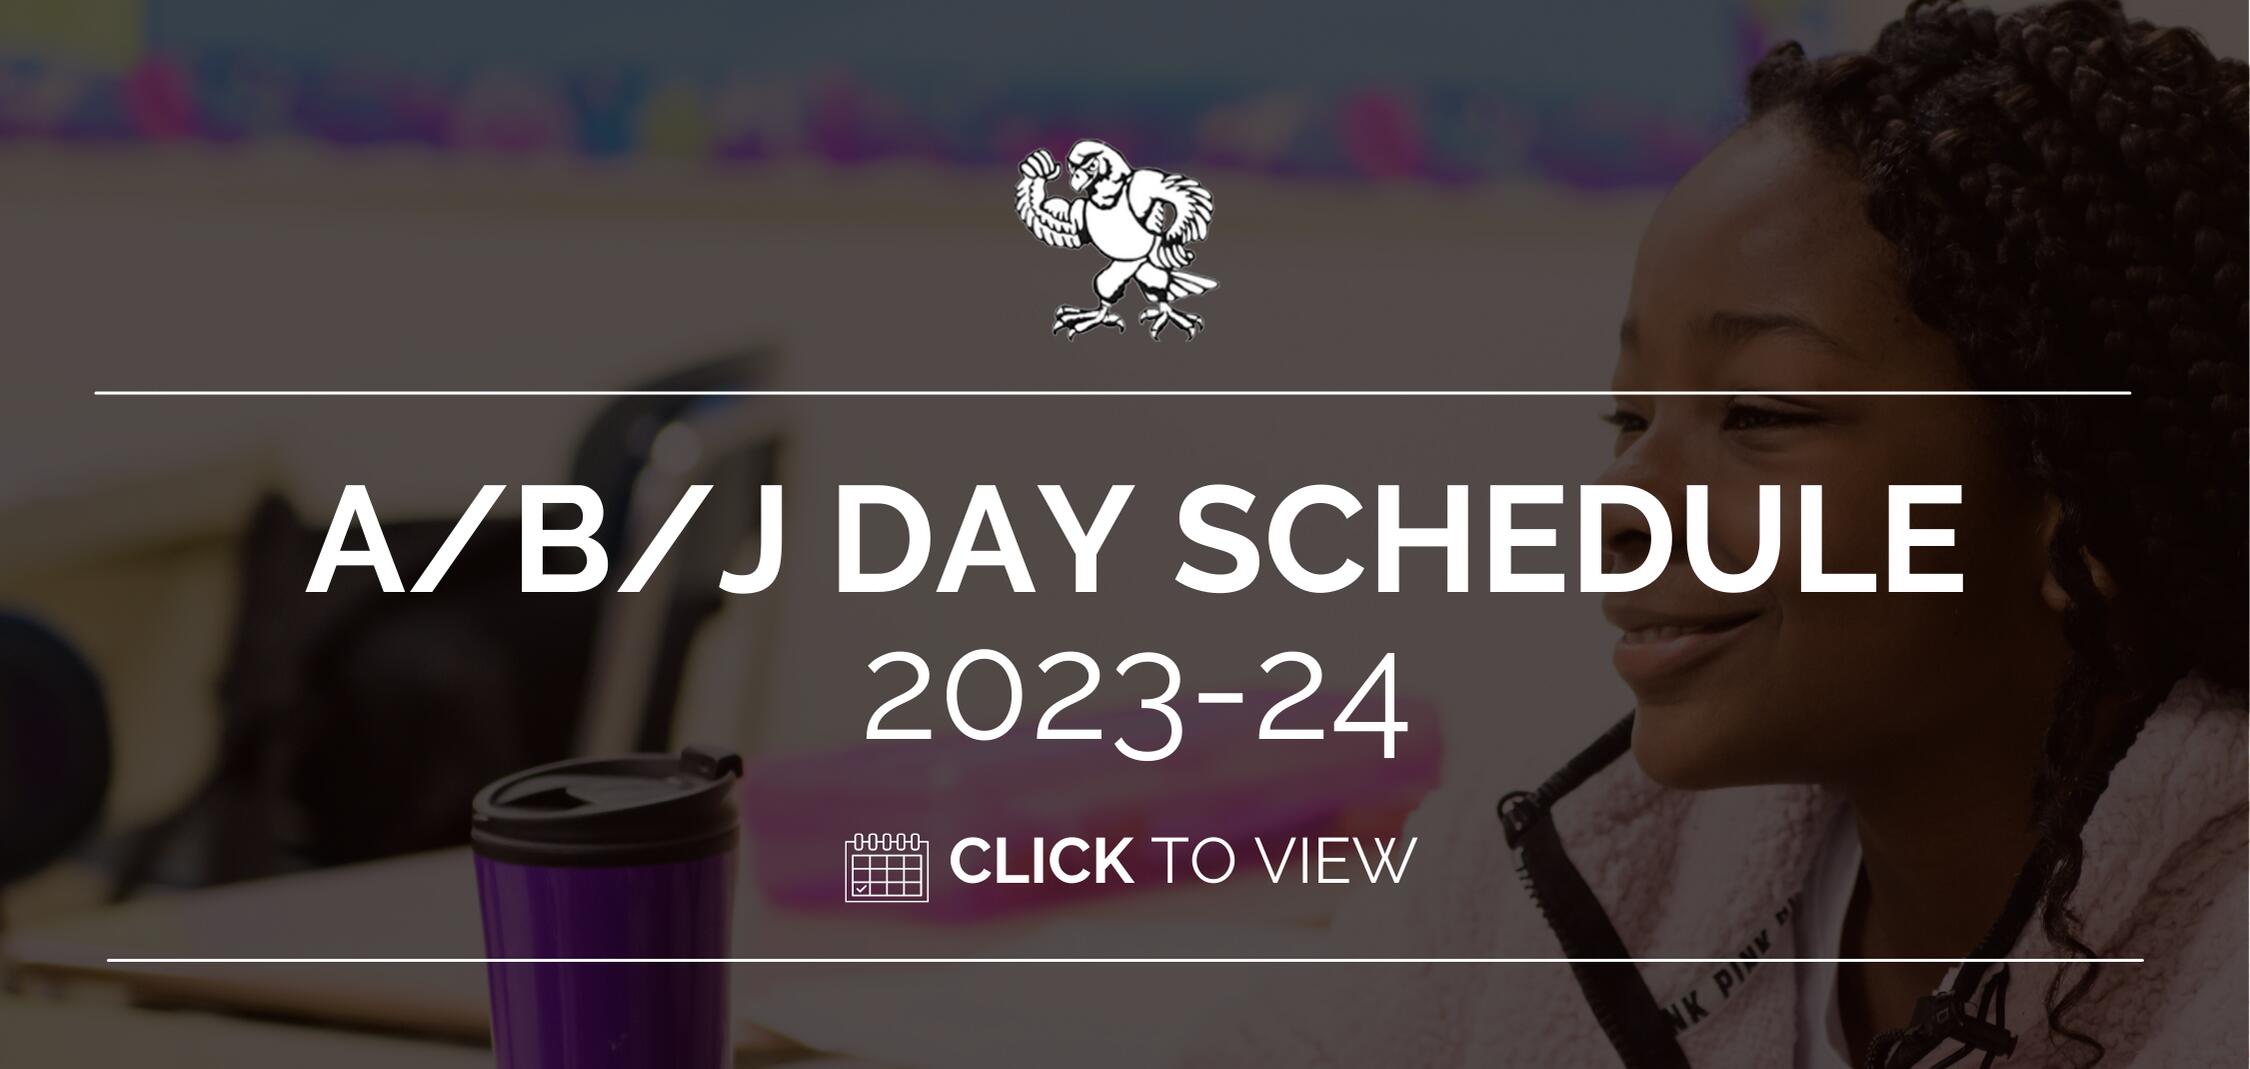 Click to view the 2023-24 Julian A/B/J Calendar